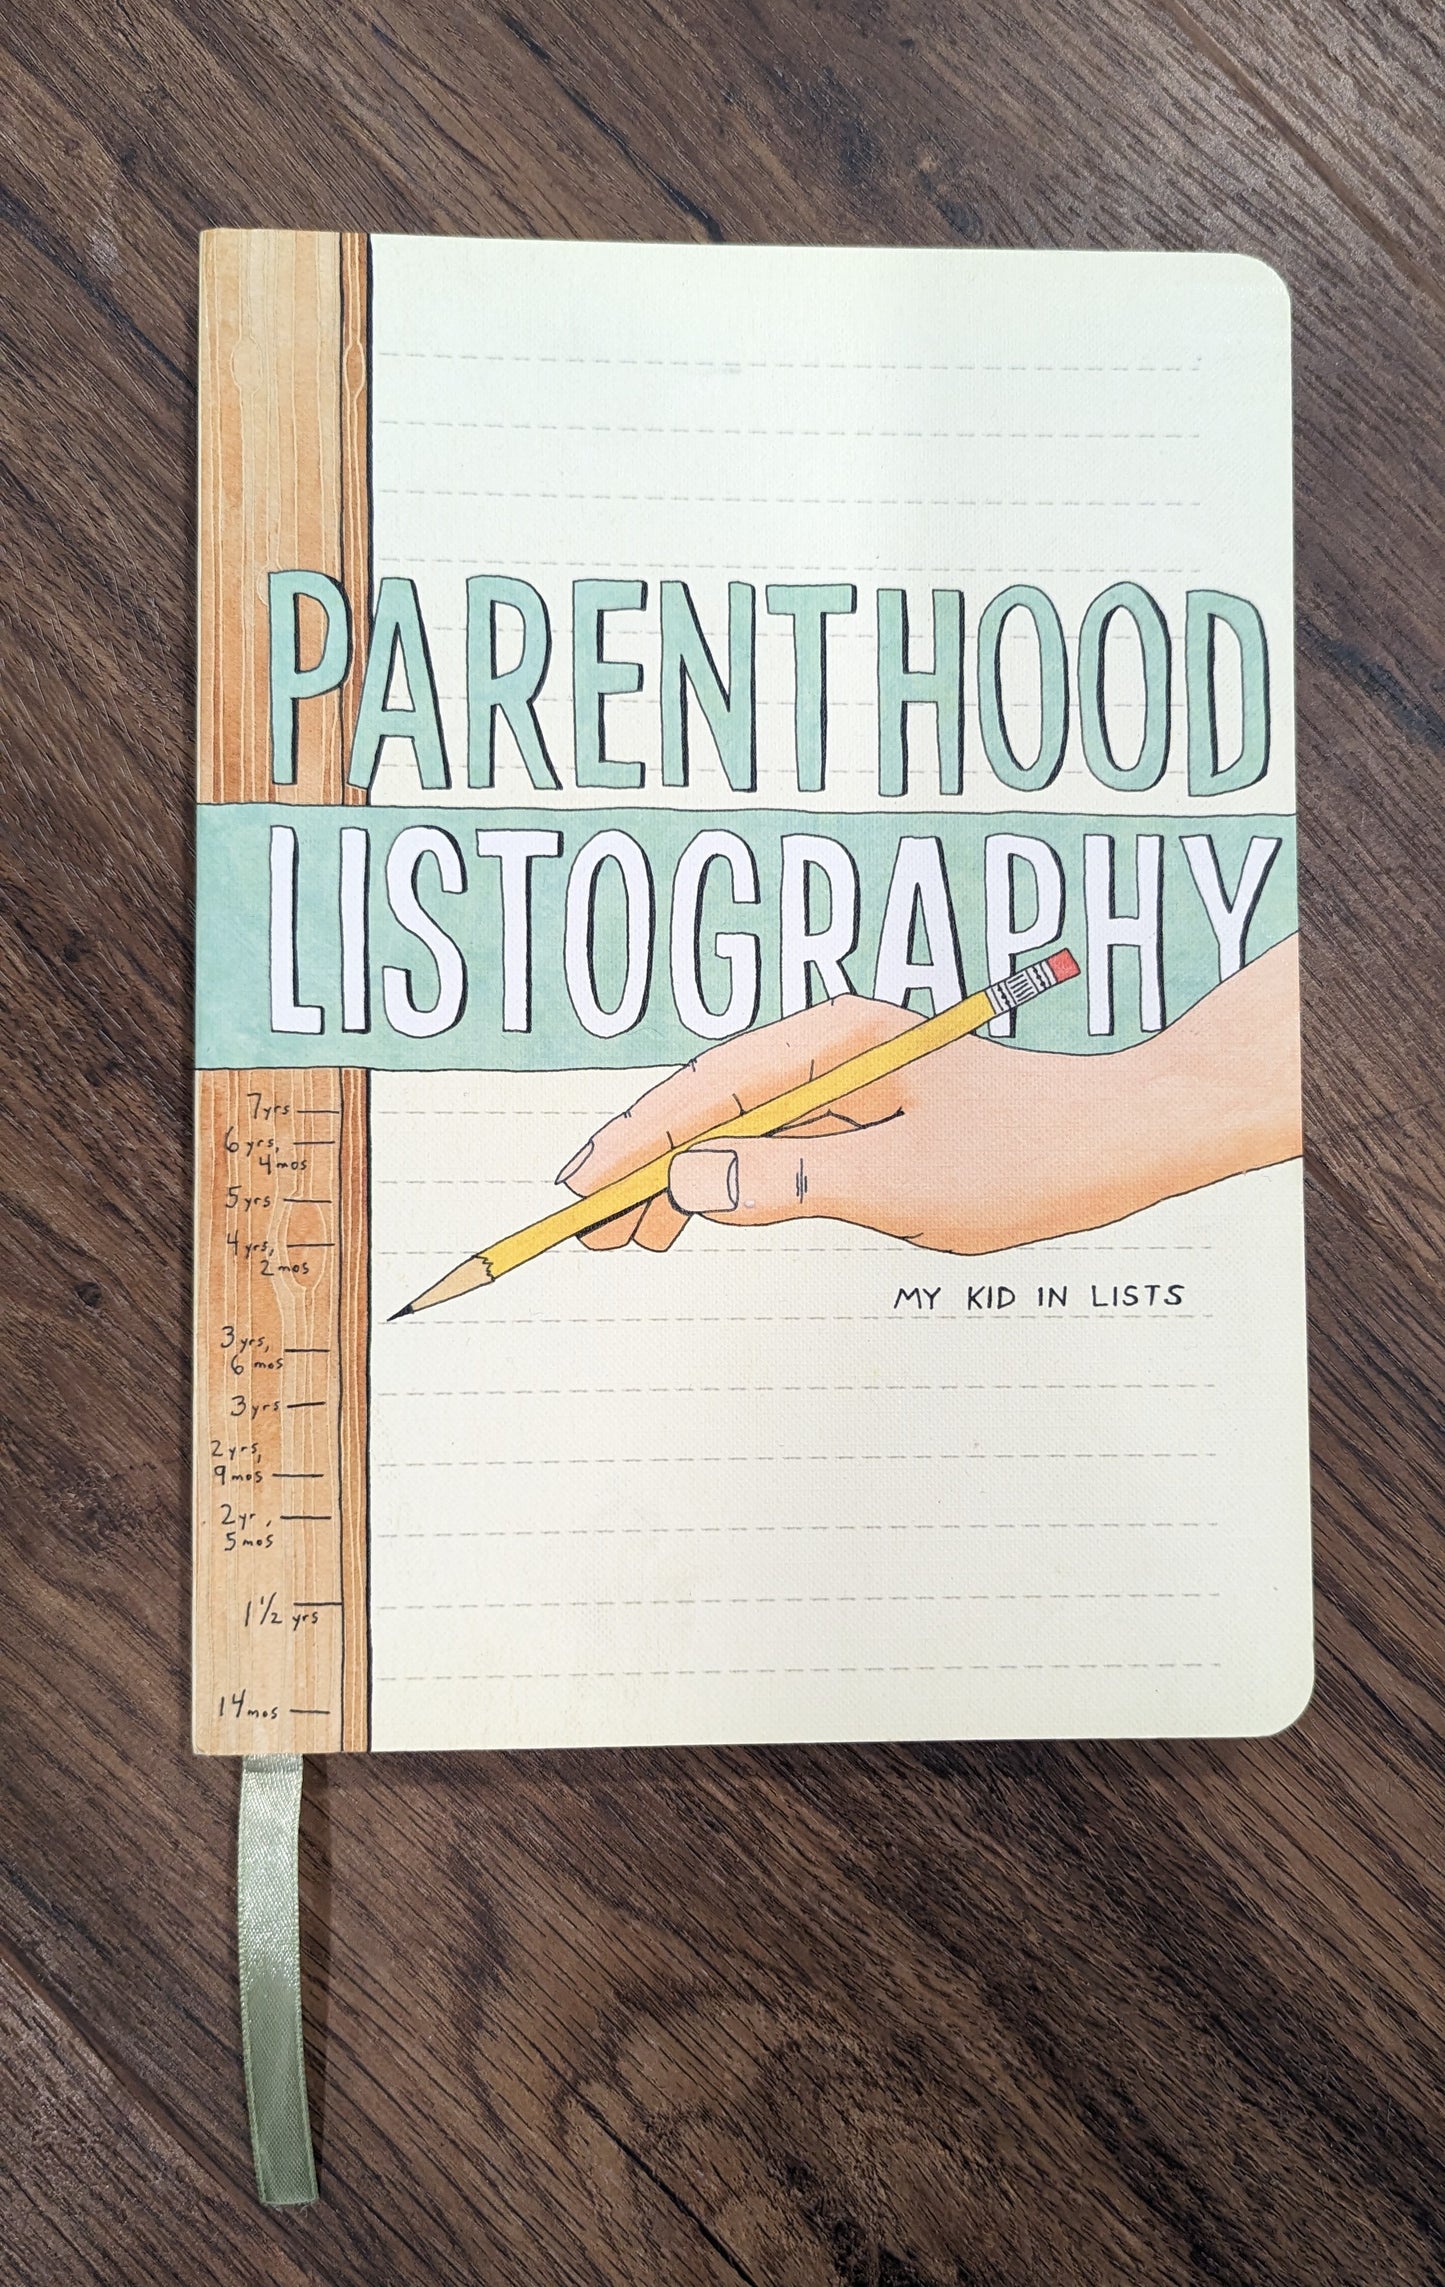 Parenthood Listography book, brand new